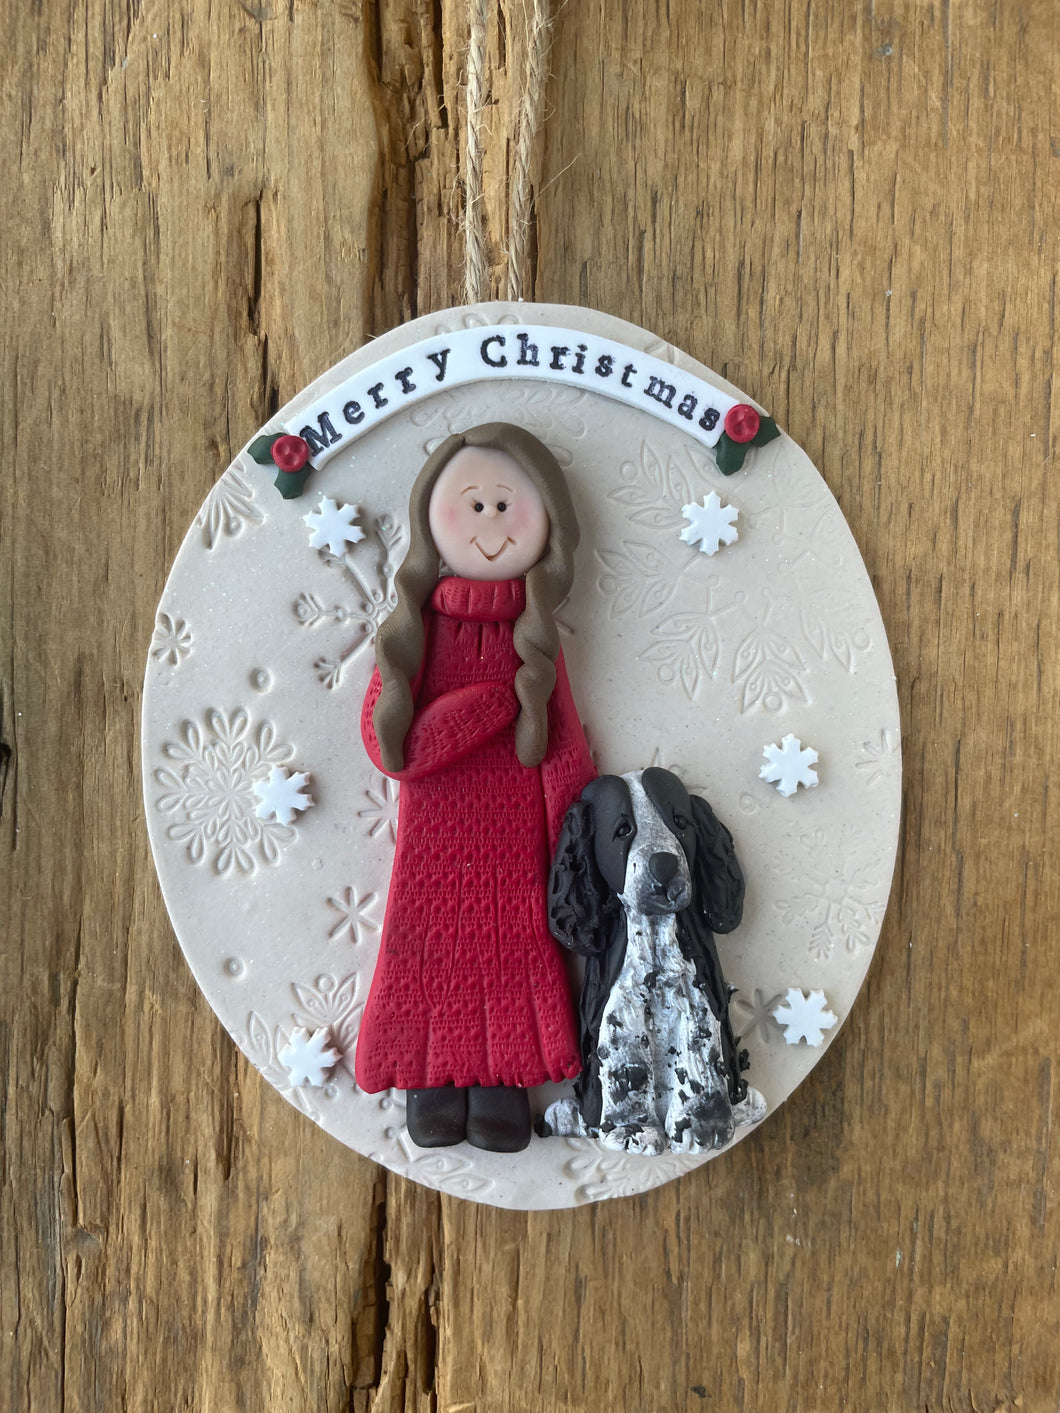 2 Member custom clay family portrait Christmas ornament